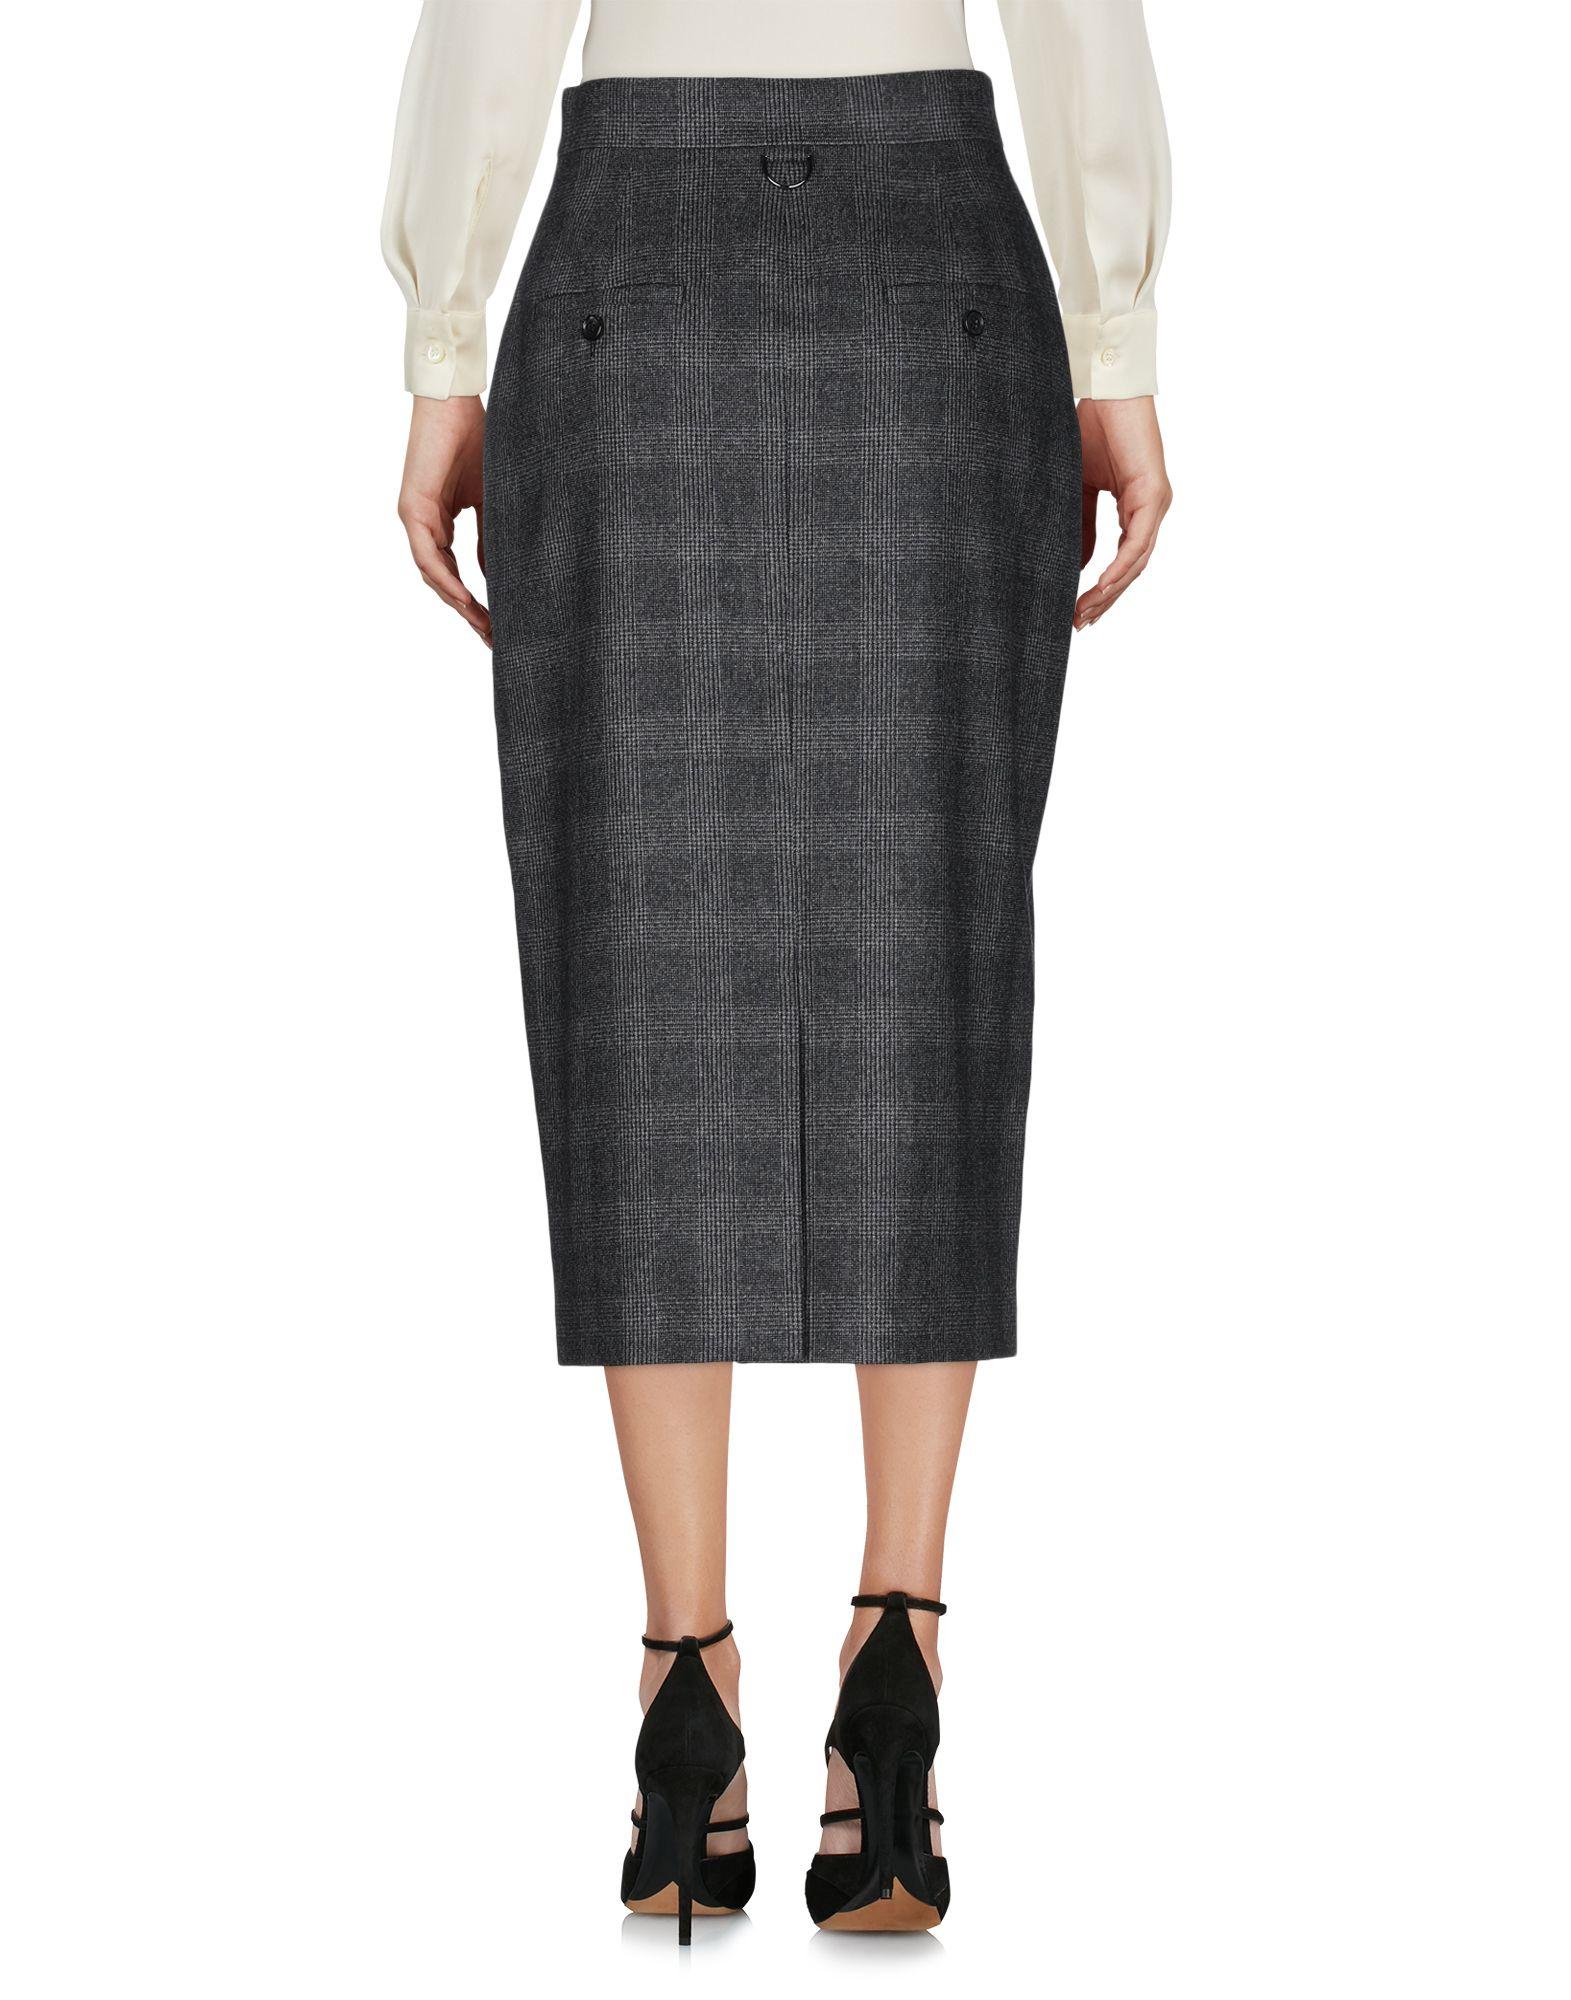 Max Mara 3/4 Length Skirt in Gray - Lyst